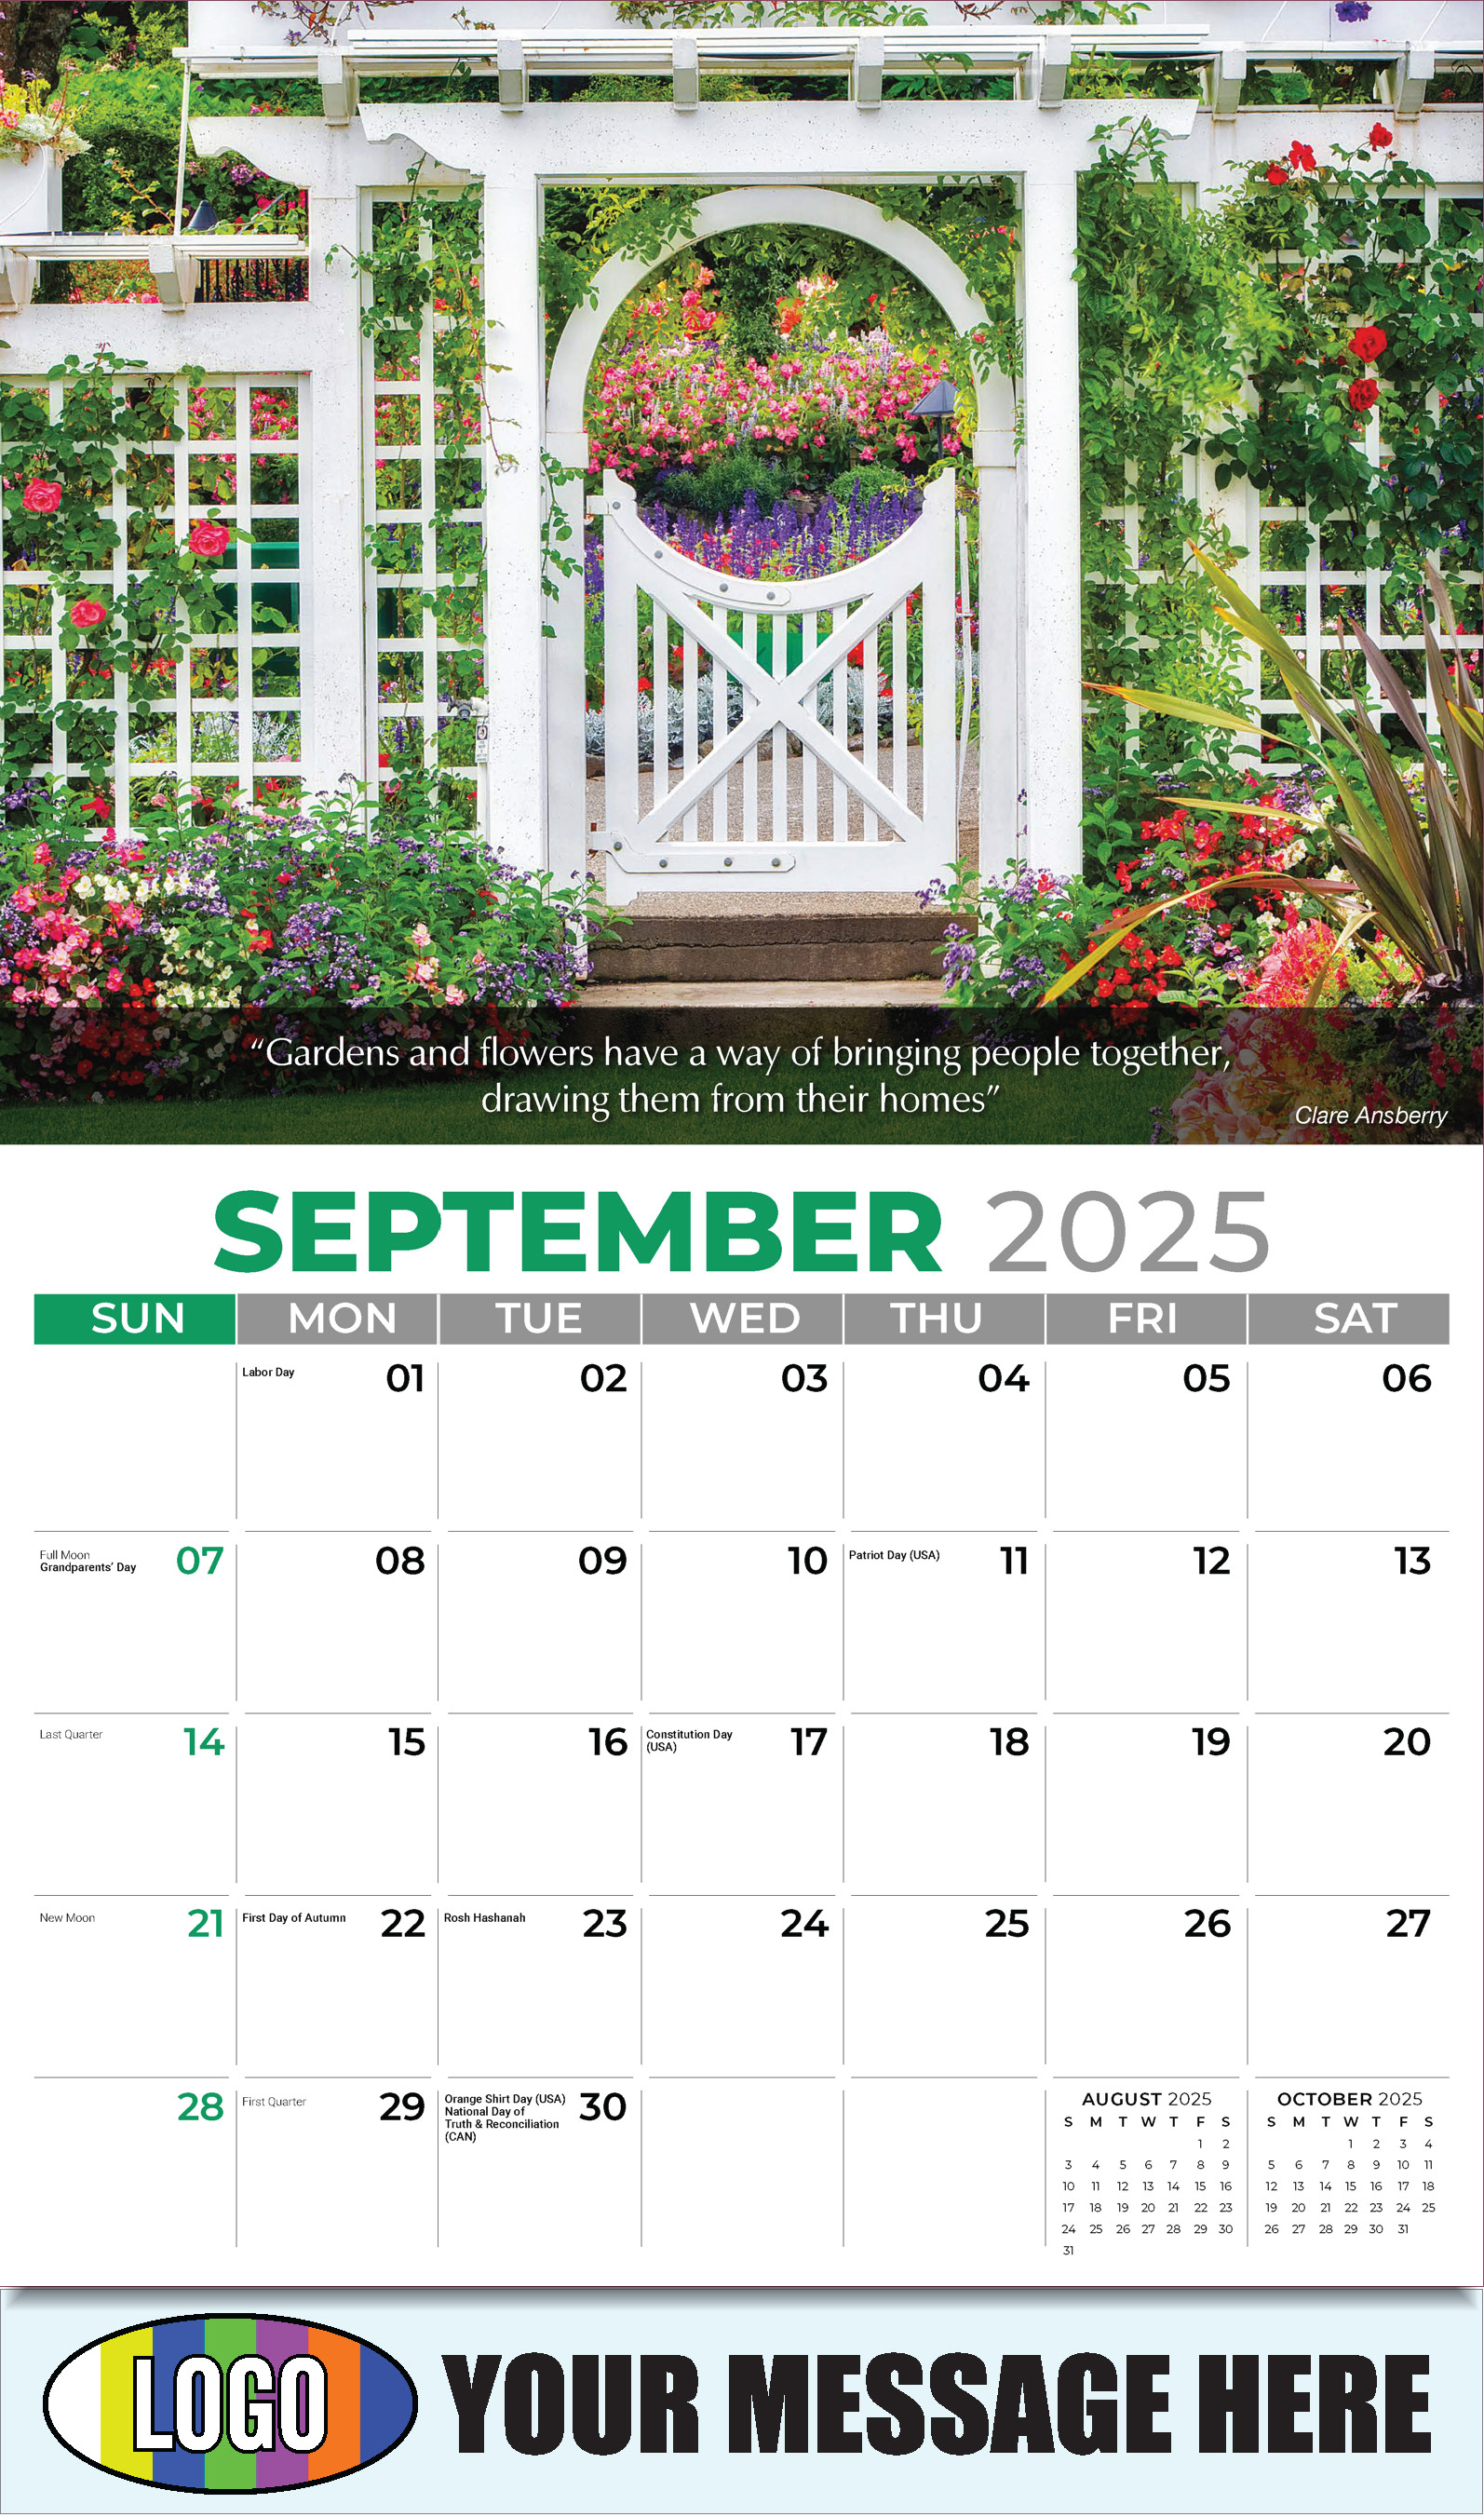 Flowers and Gardens 2025 Business Advertising Calendar - September